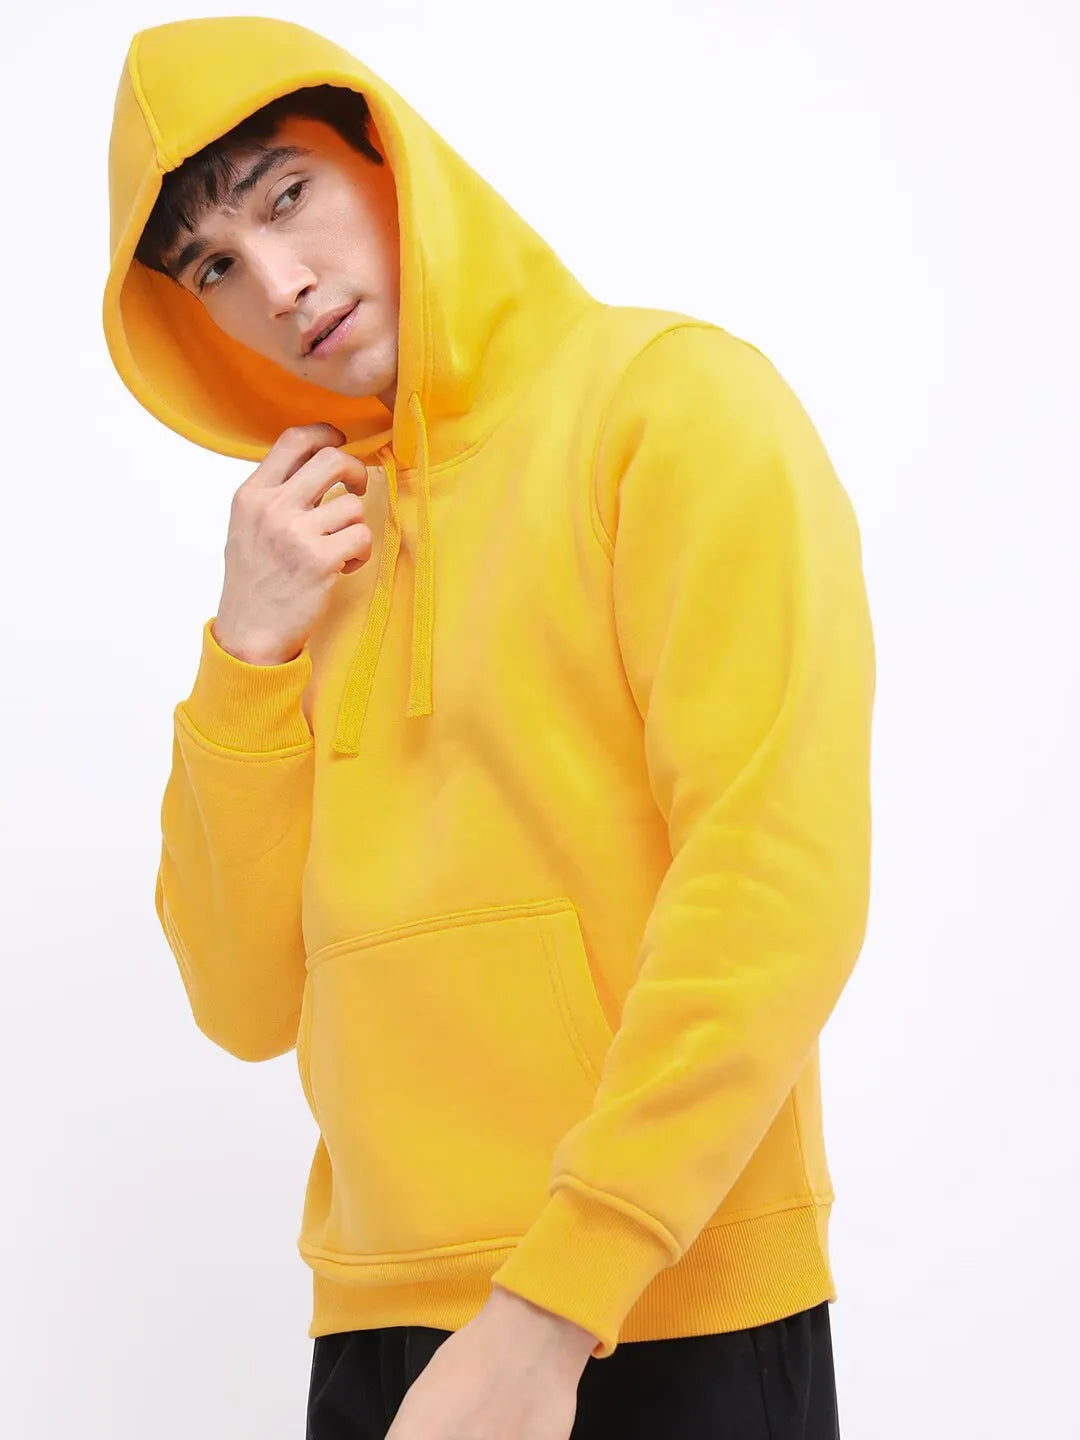 Hoodie For Men and Women (Unisex) Mustard Yellow Full Sleeves